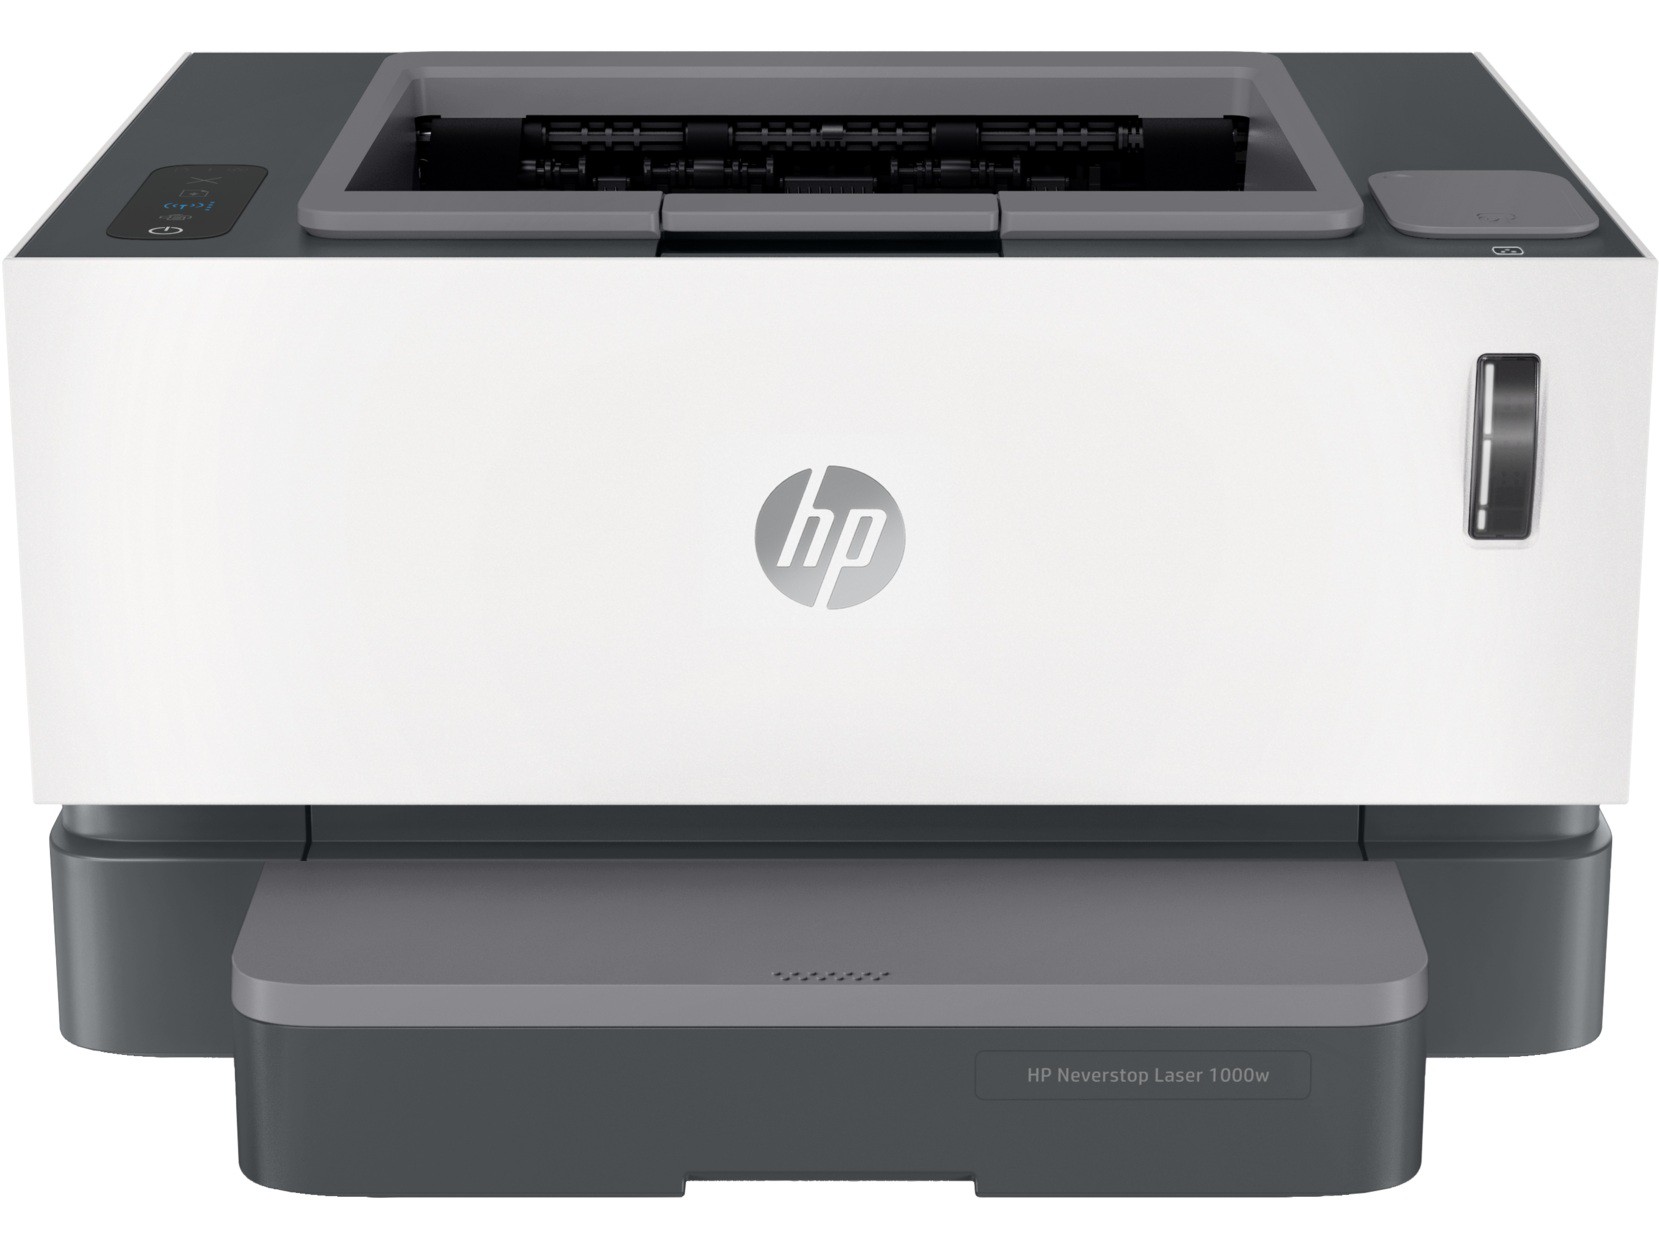 Принтер HP Neverstop Laser 1000w (4RY23A) (лазерное монохромное, A4, 600x600 dpi, 20ppm, Wi-Fi, USB)